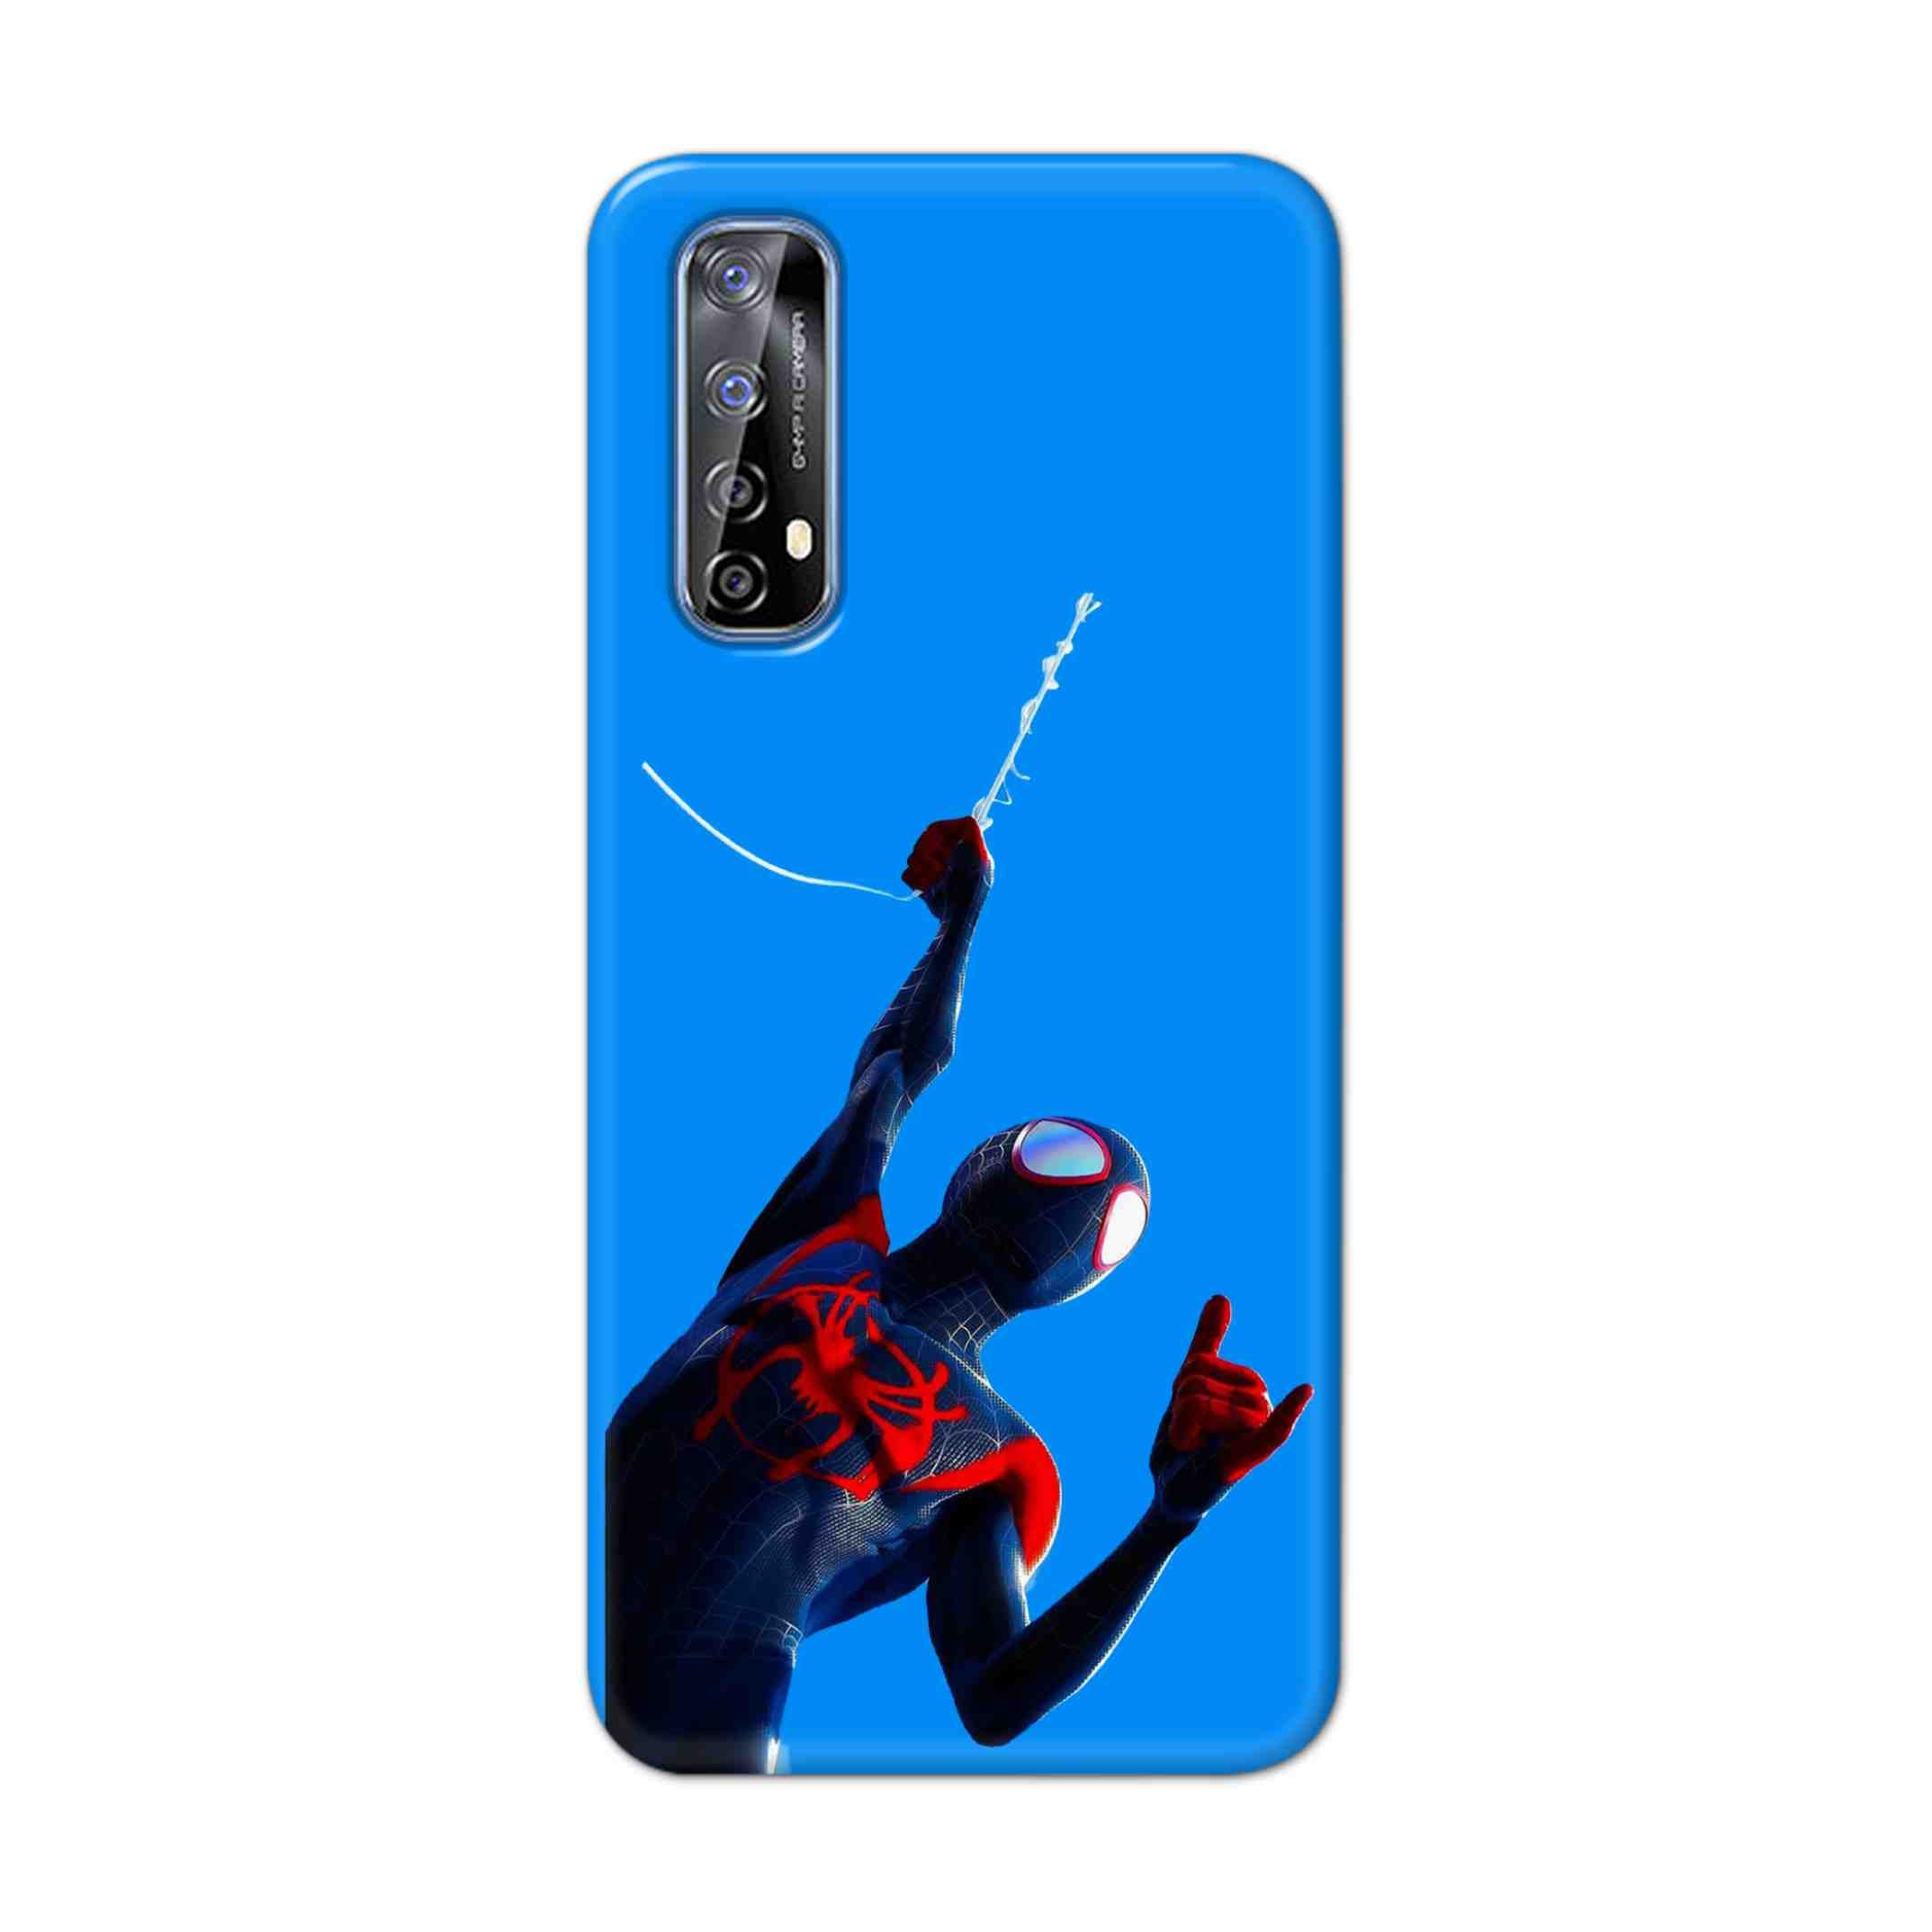 Buy Miles Morales Spiderman Hard Back Mobile Phone Case Cover For Realme 7 Online